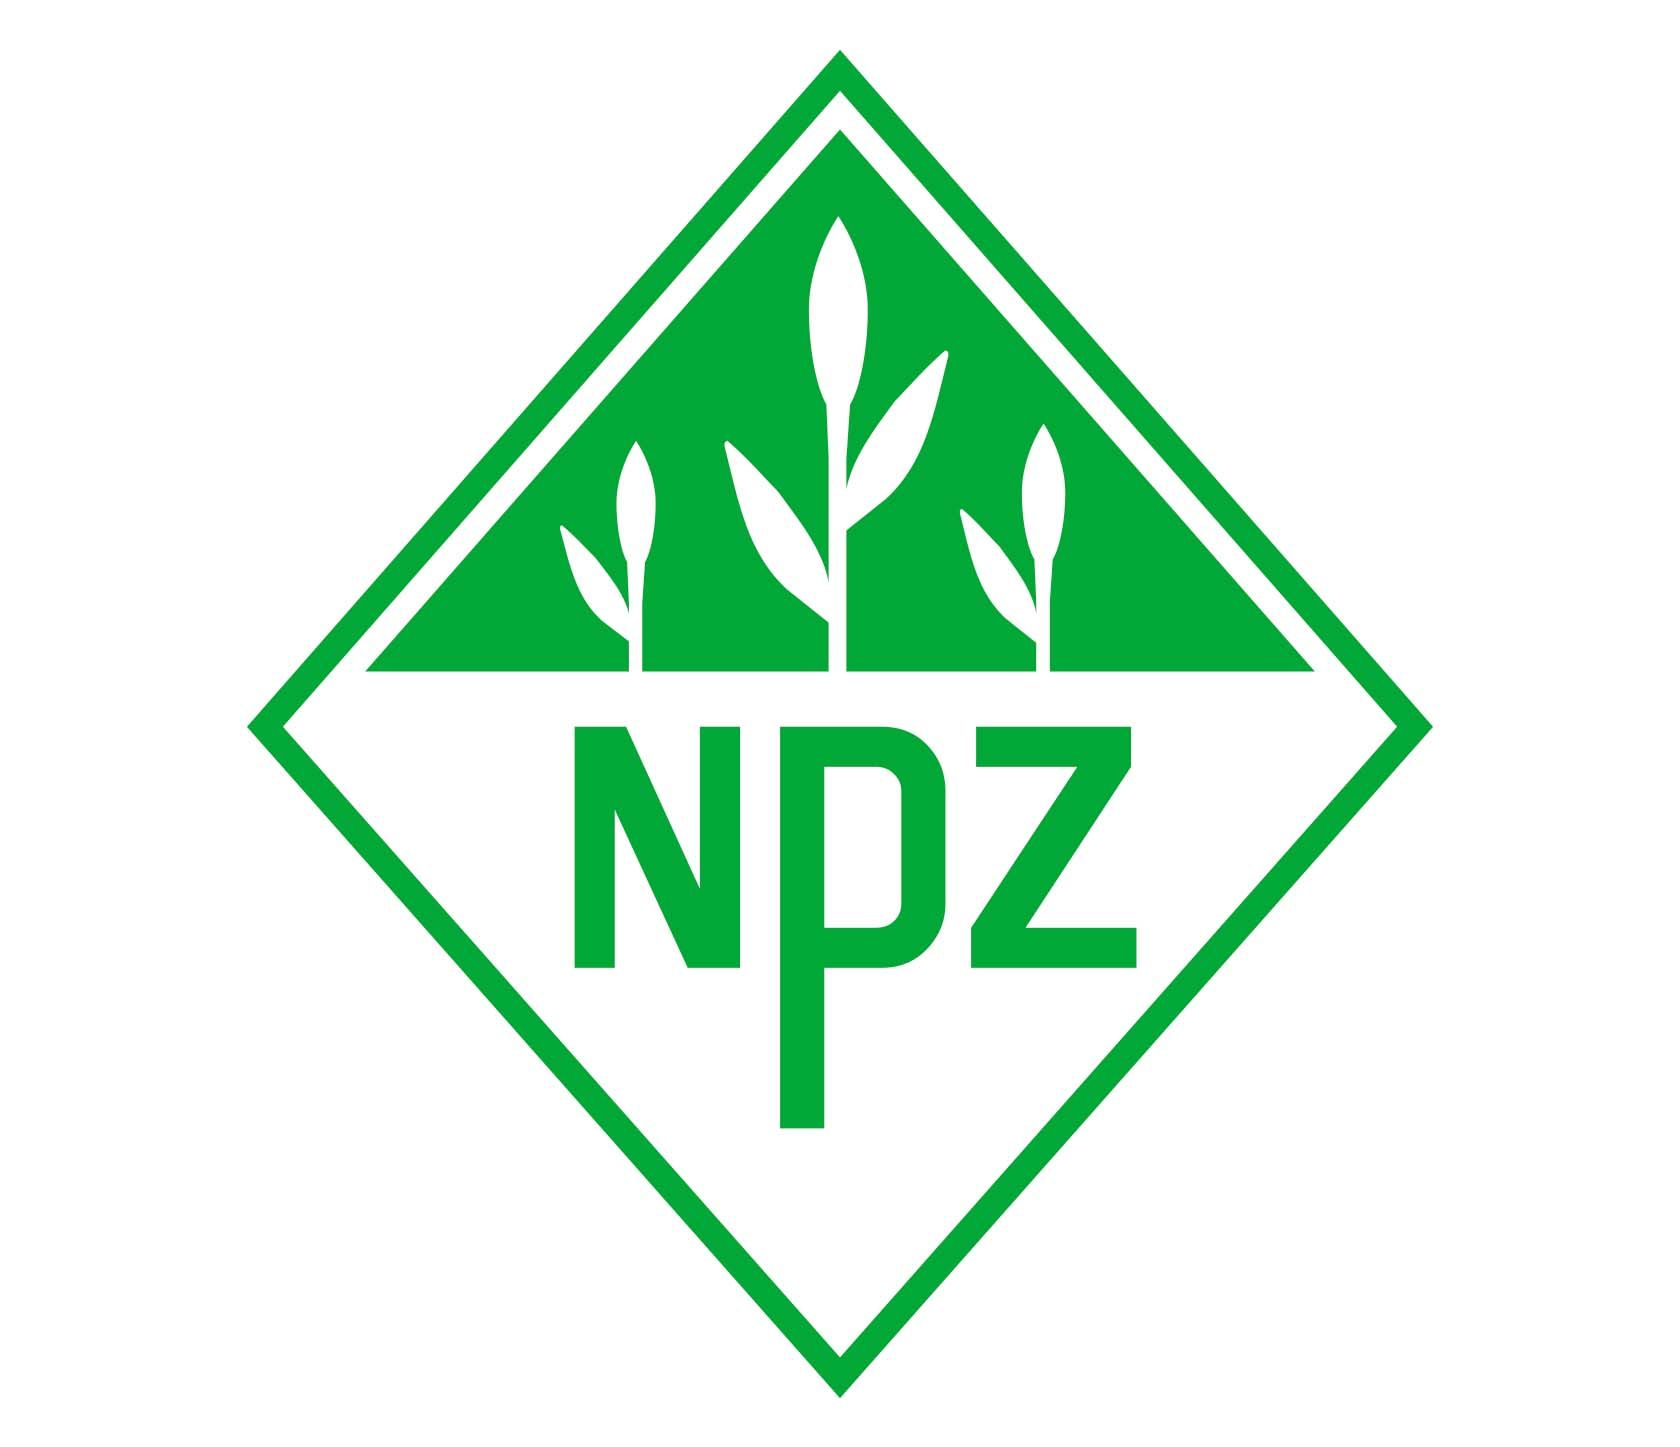 NPZ logo for crop plots